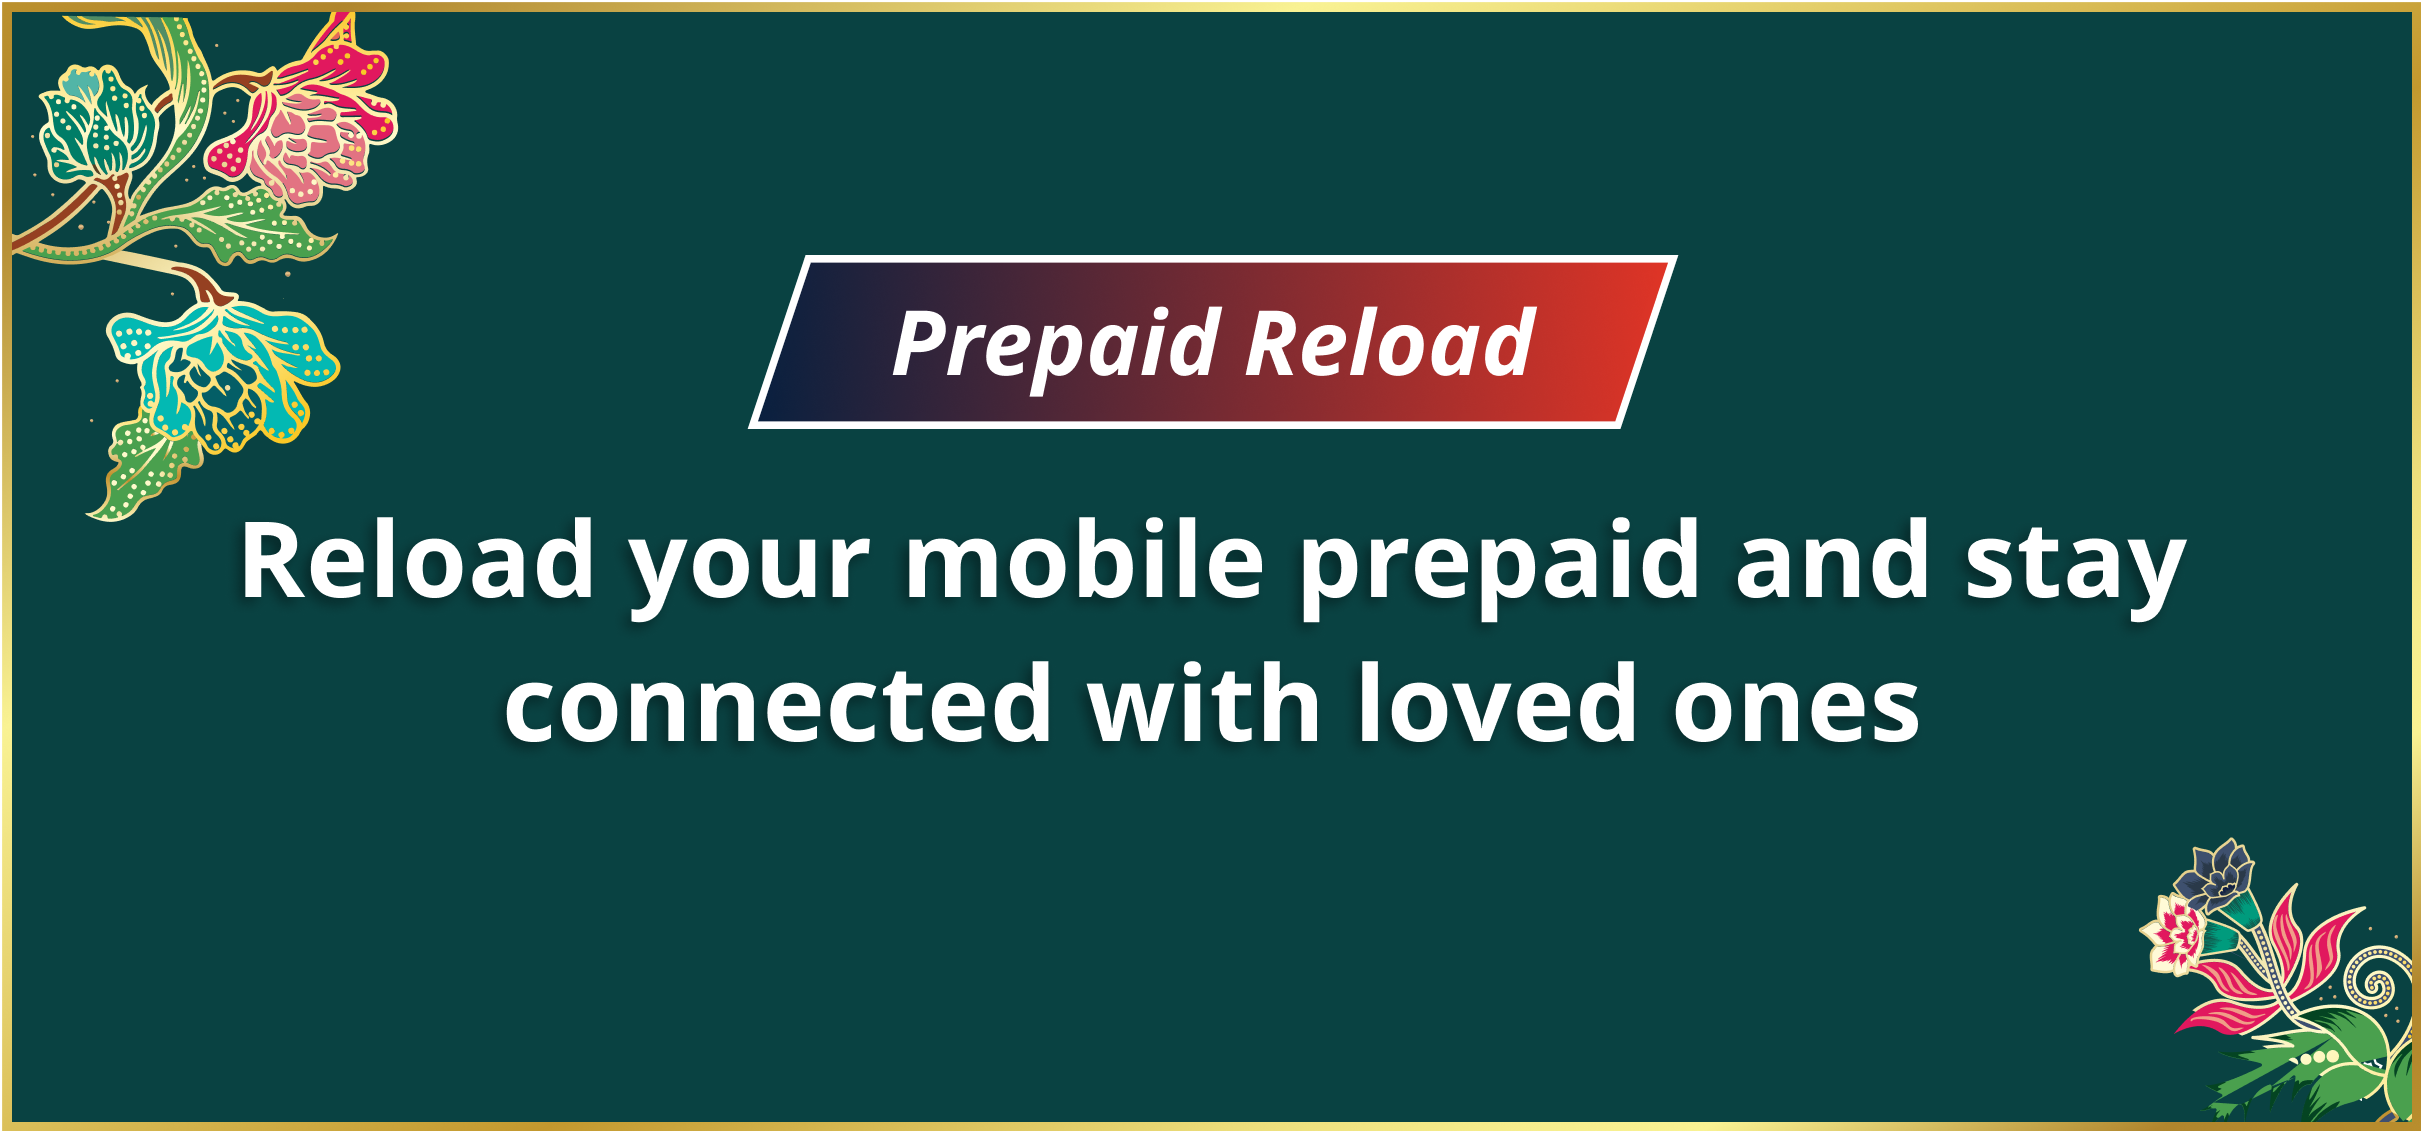 Prepaid Reload